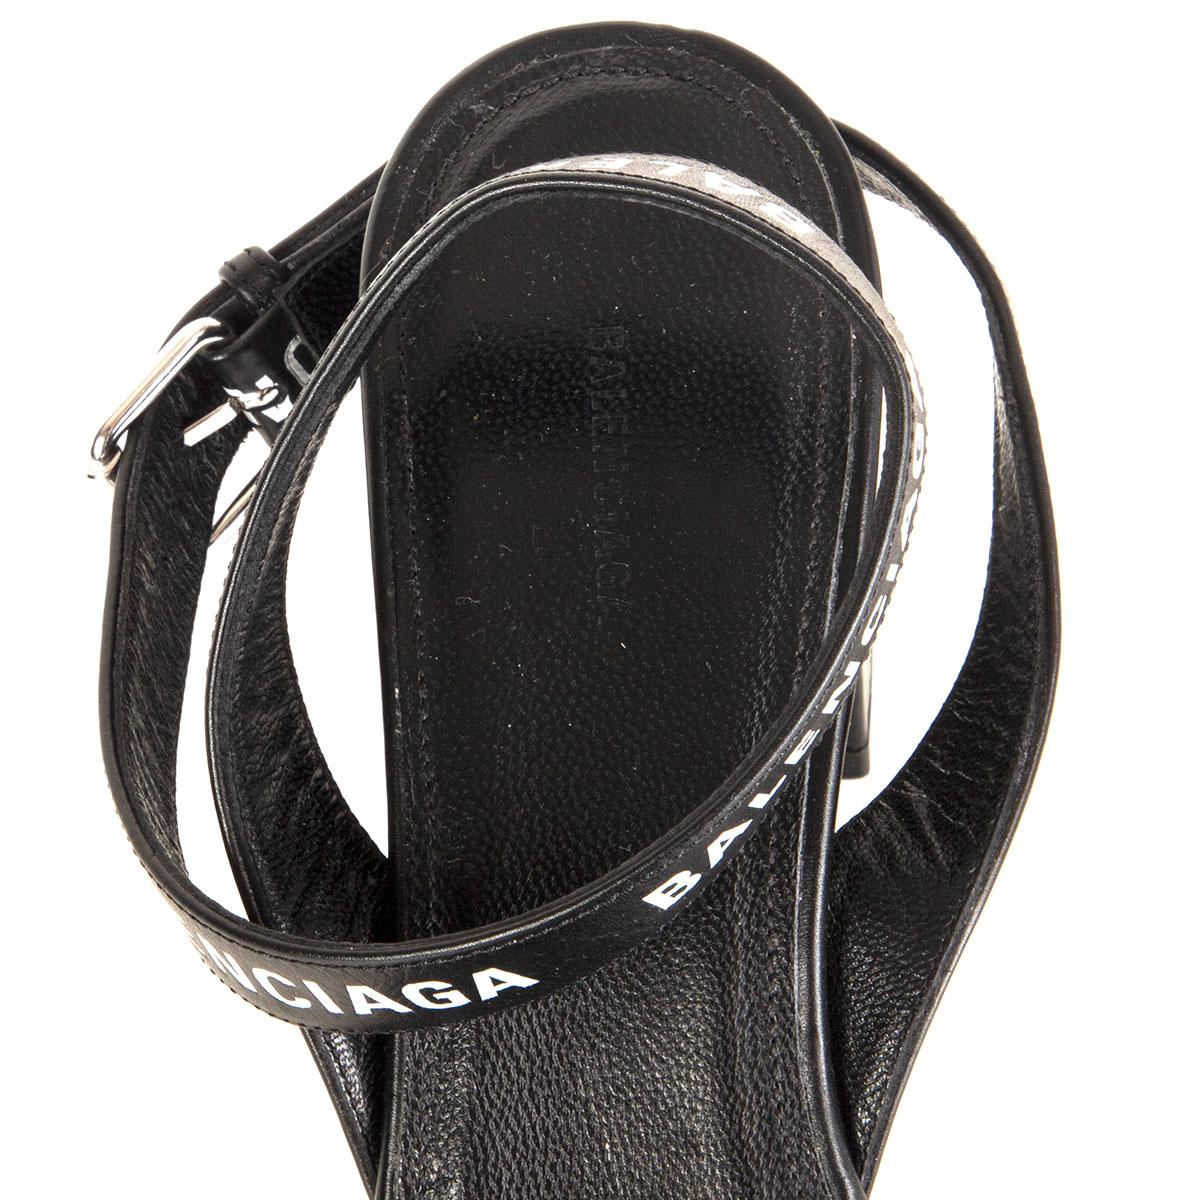 Black BALENCIAGA black leather LOGO BLOCK HEEL Sandals Shoes 36.5